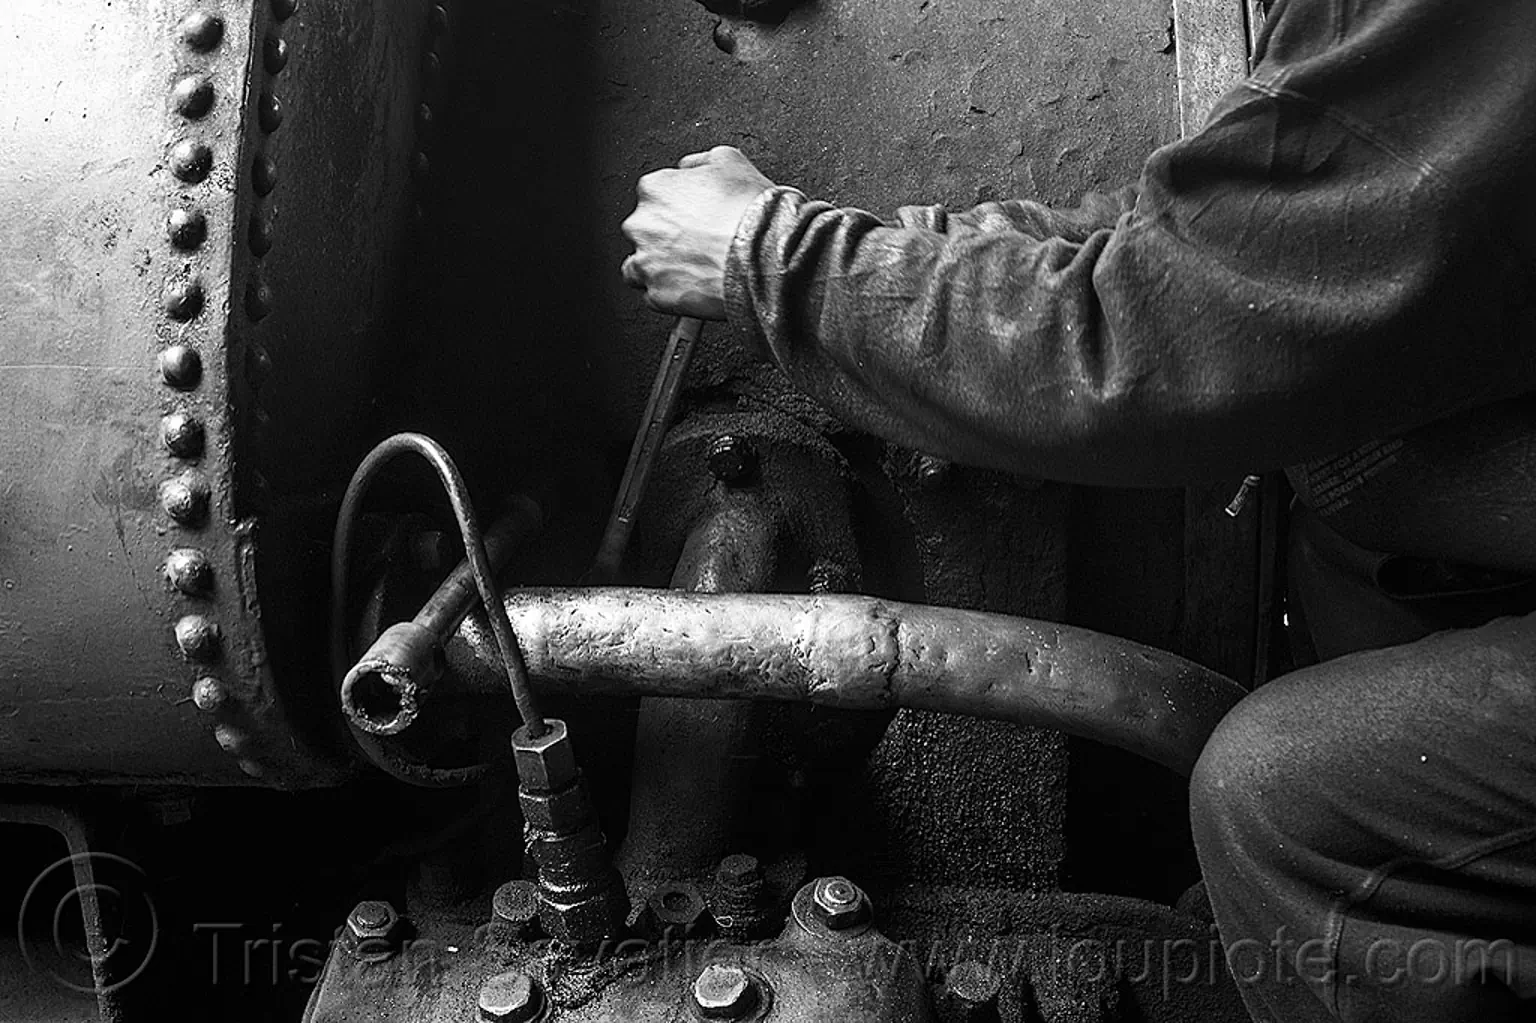 steam locomotive maintenance work in darjeeling (india), 791, brass pipe, darjeeling himalayan railway, darjeeling toy train, fixing, man, narrow gauge, railroad, repairing, steam engine, steam locomotive, steam train engine, worker, working, wrench